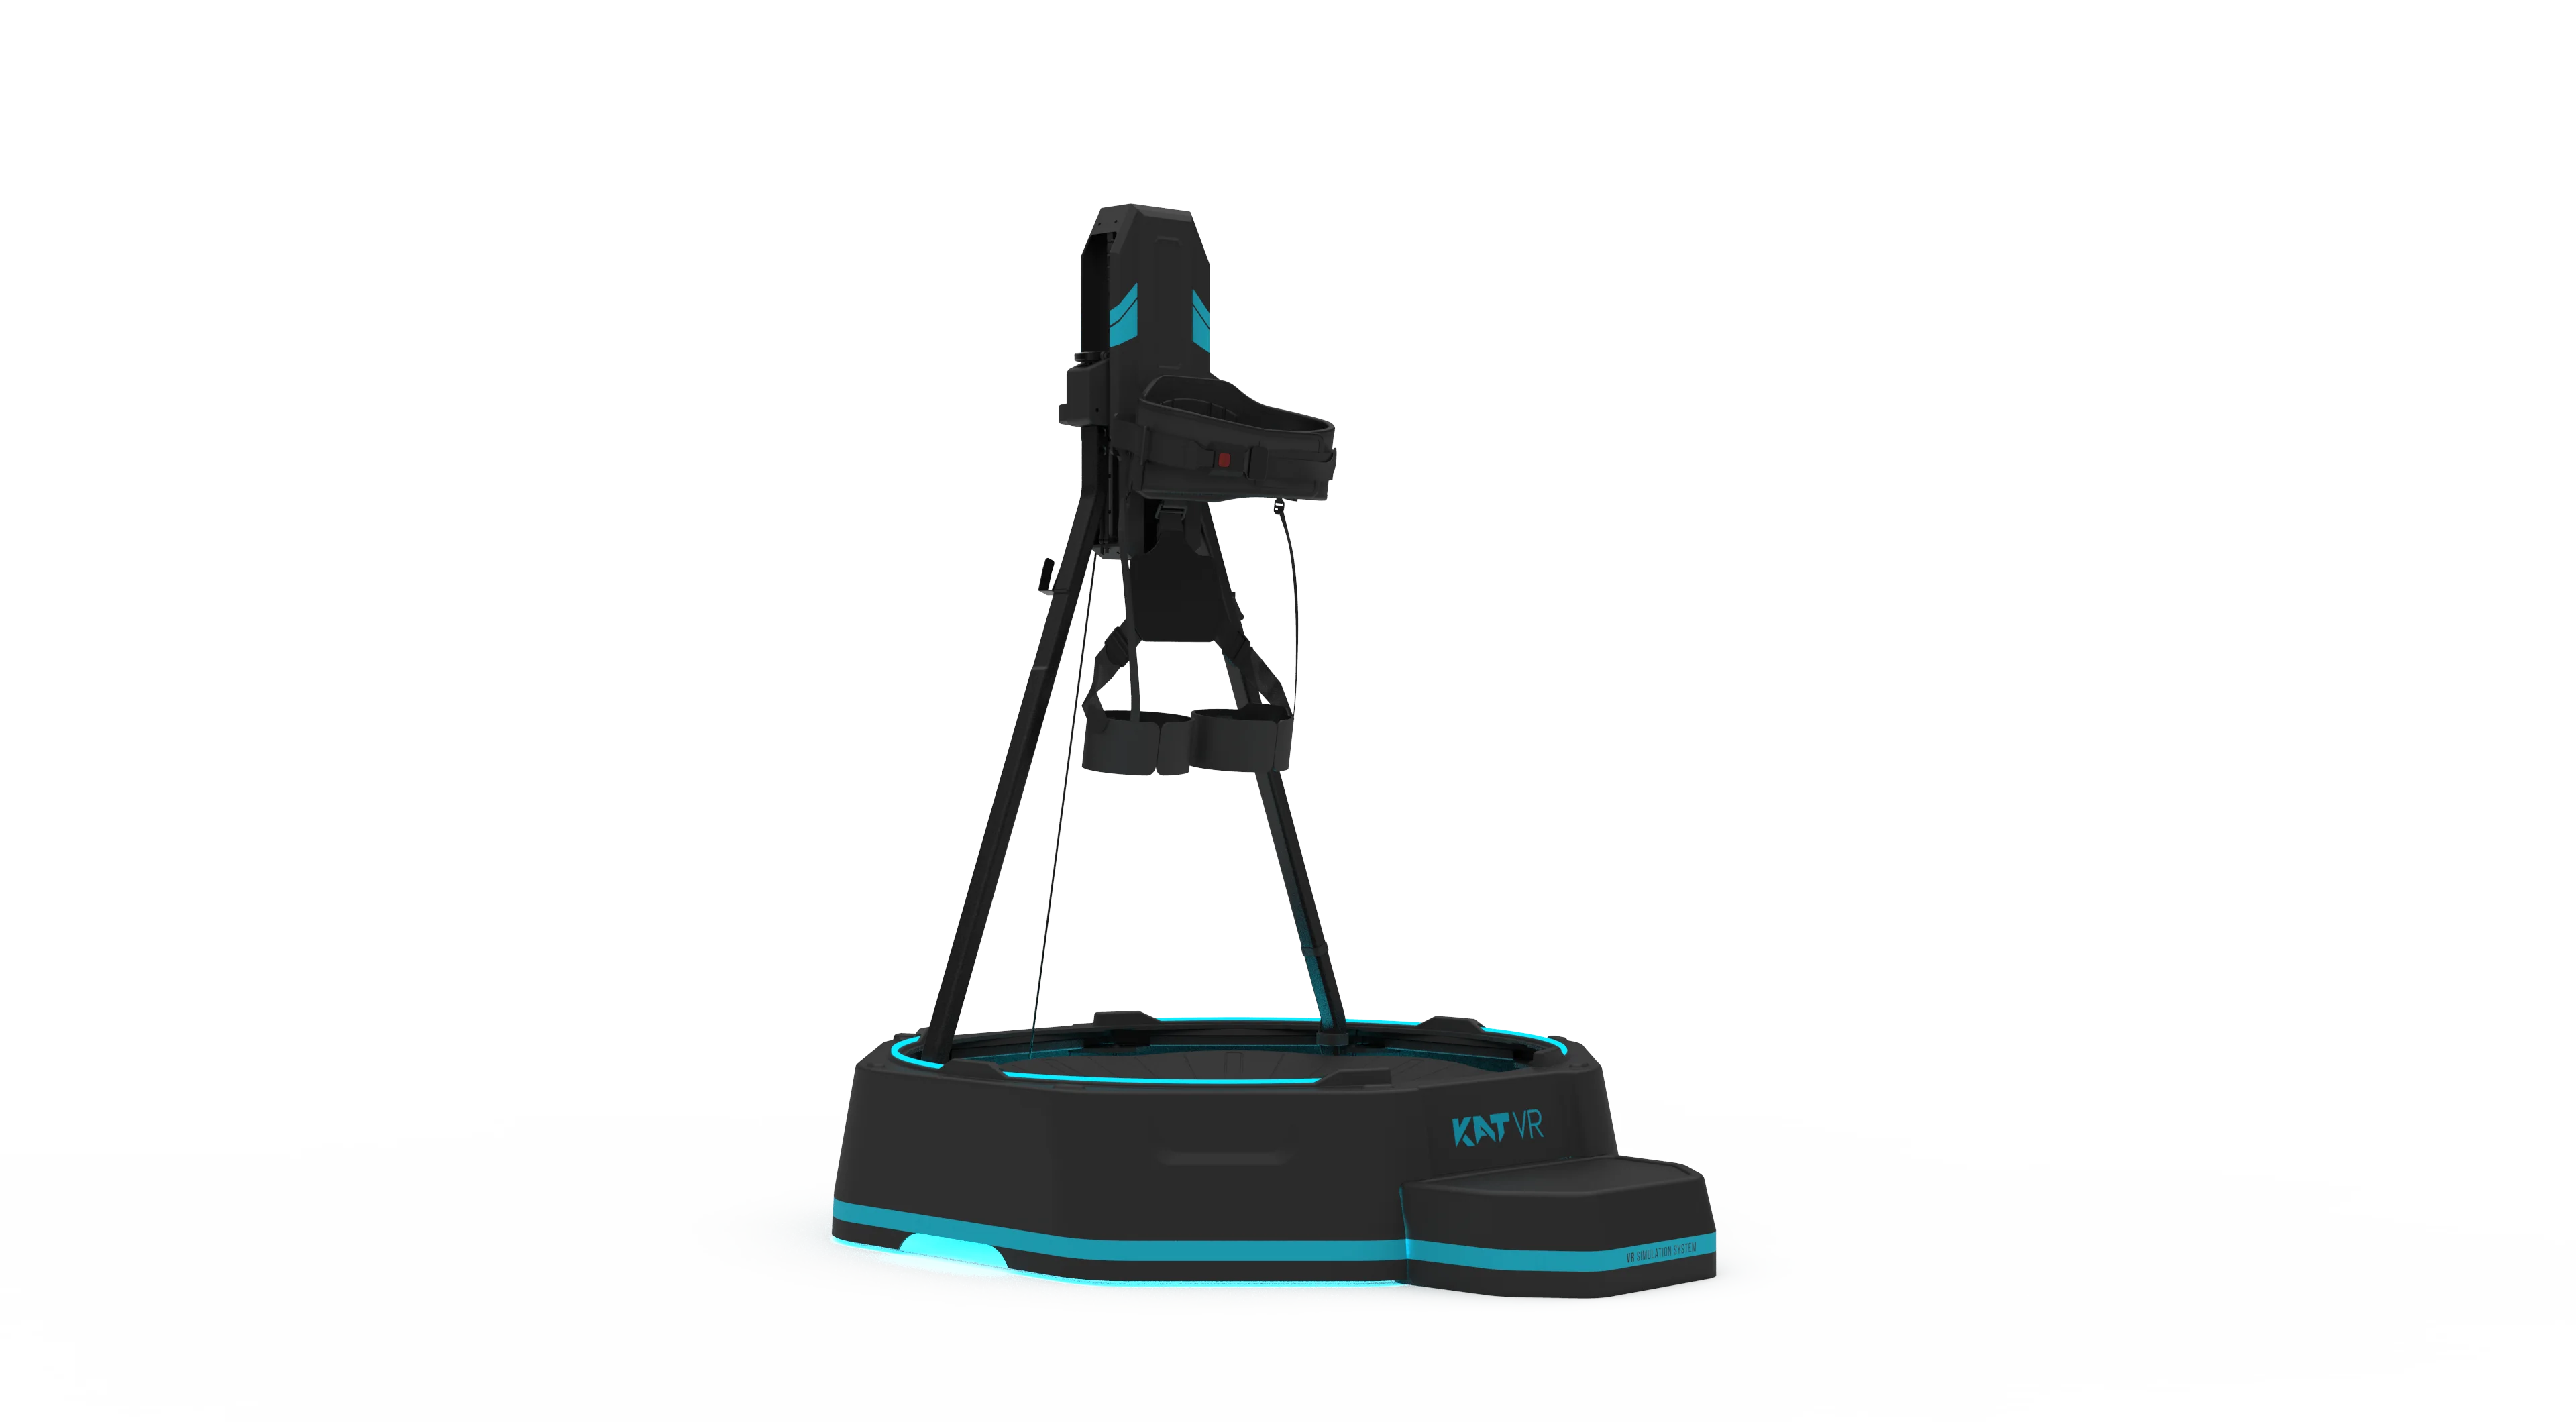 Kat vr. Kat walk VR. Дорожка для виртуальной реальности. Kat walk Mini.